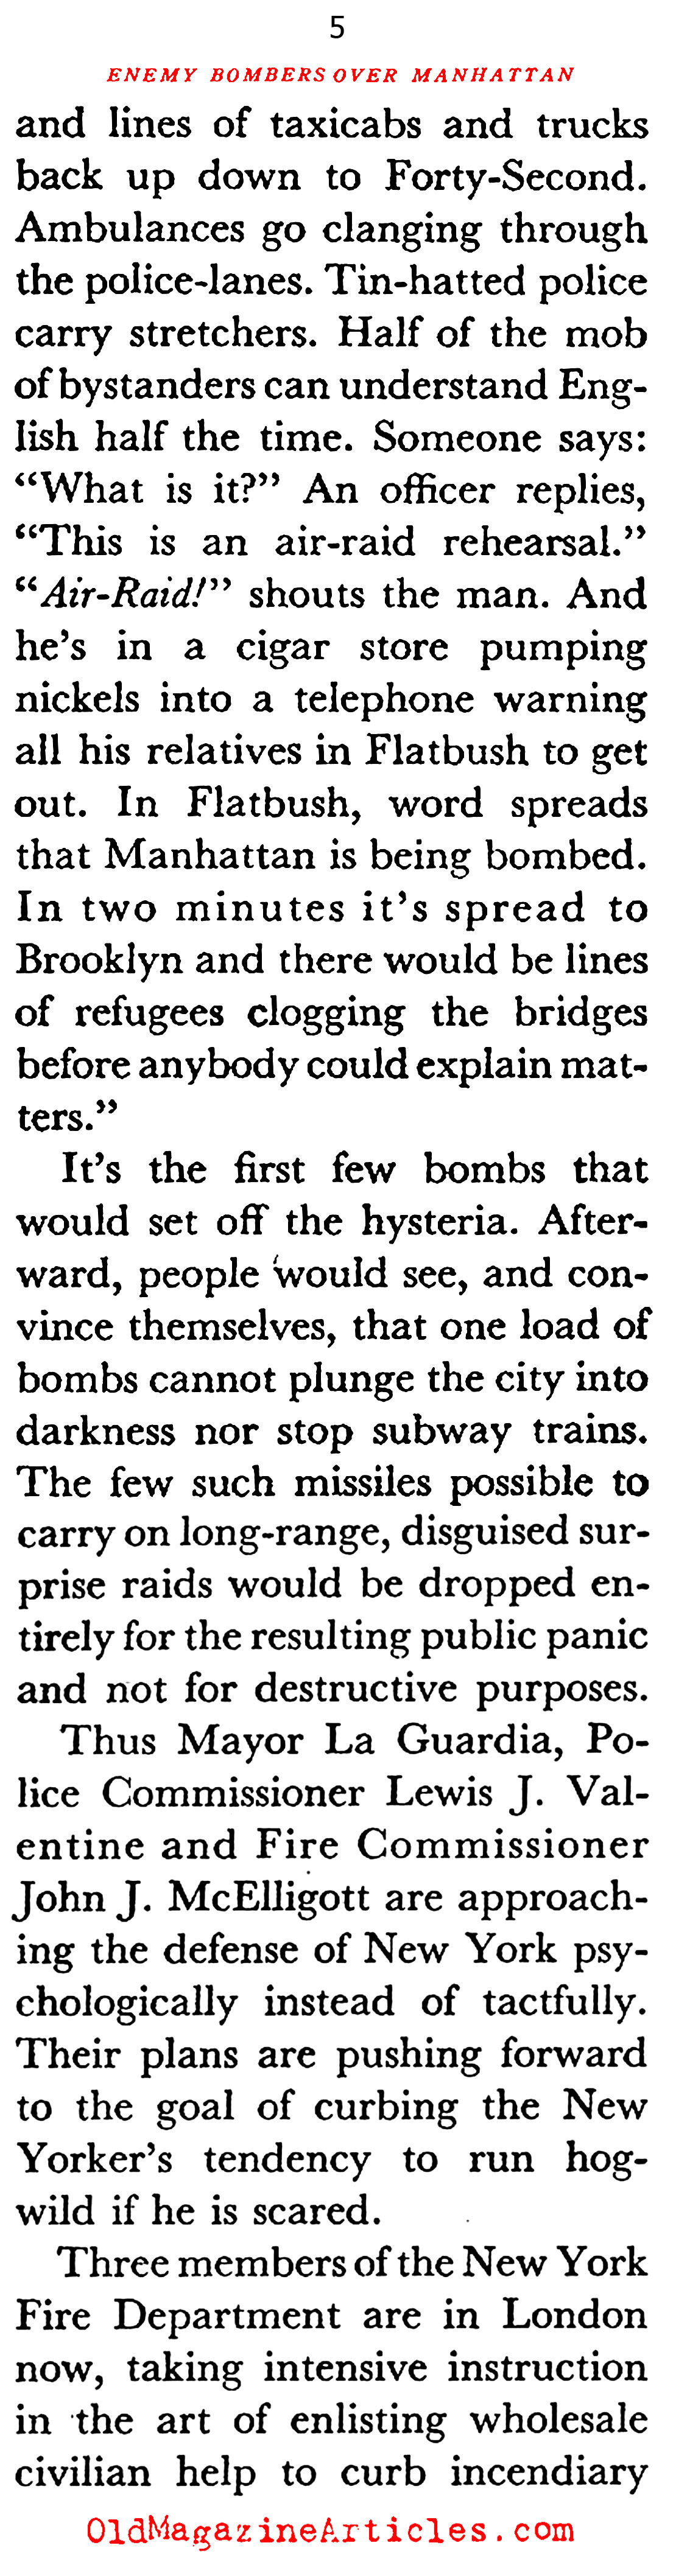 New York Beneath a Bombsight (Coronet Magazine, 1941)